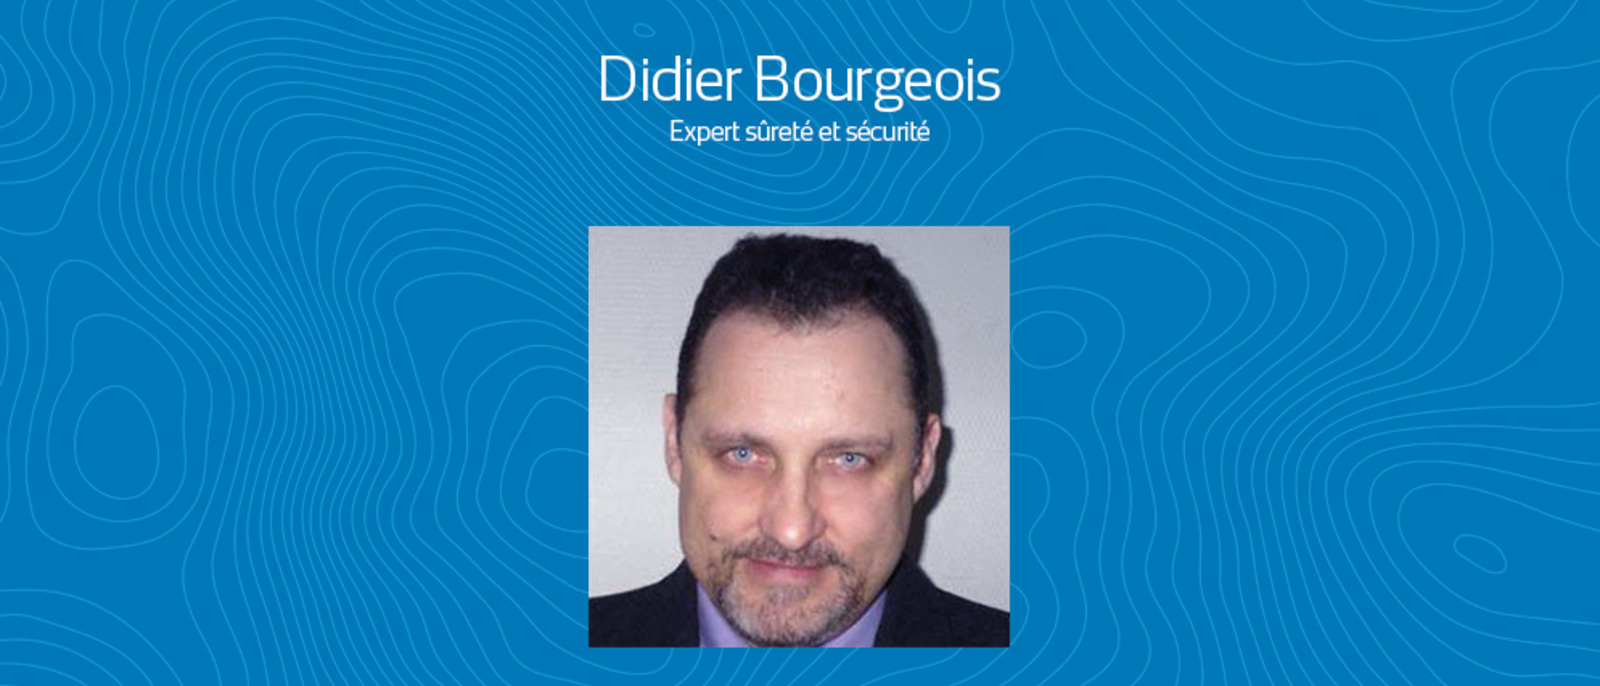 Didier Bourgeois